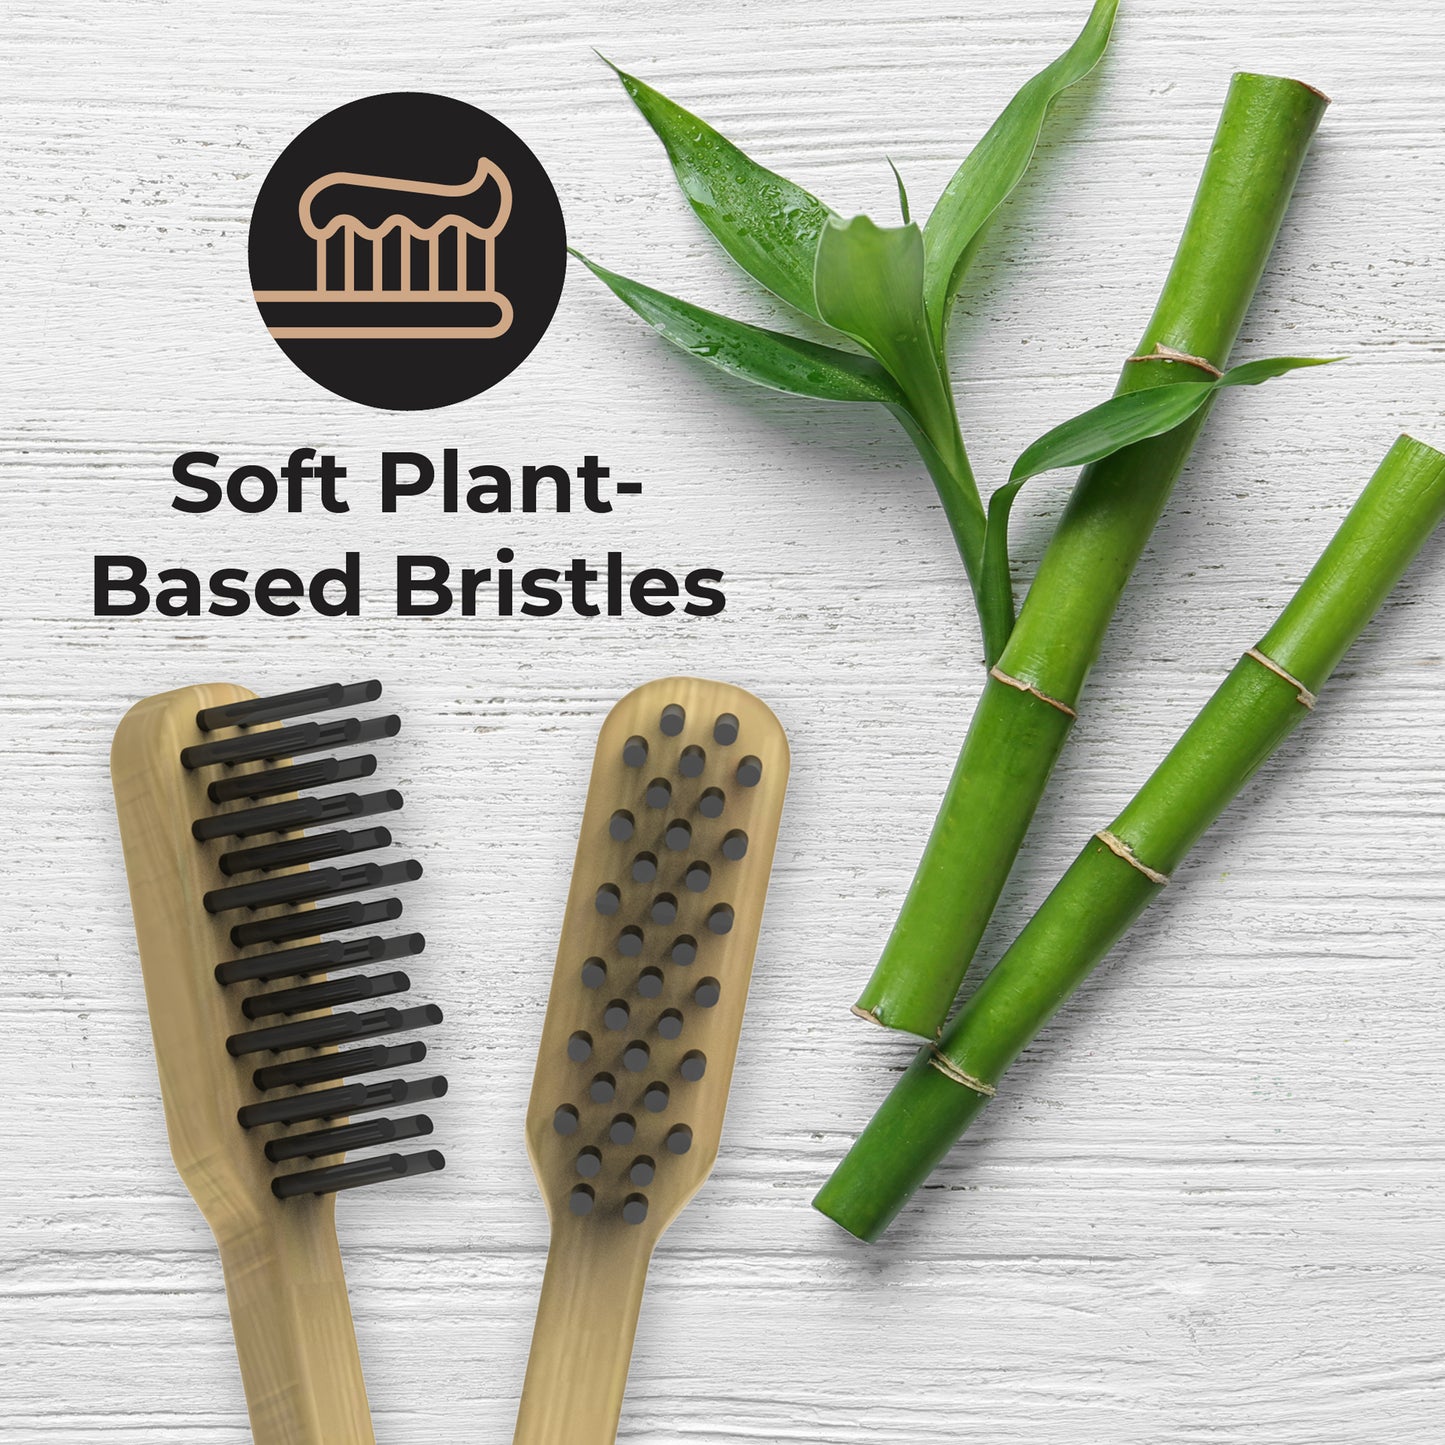 Soft Plant-based bristles